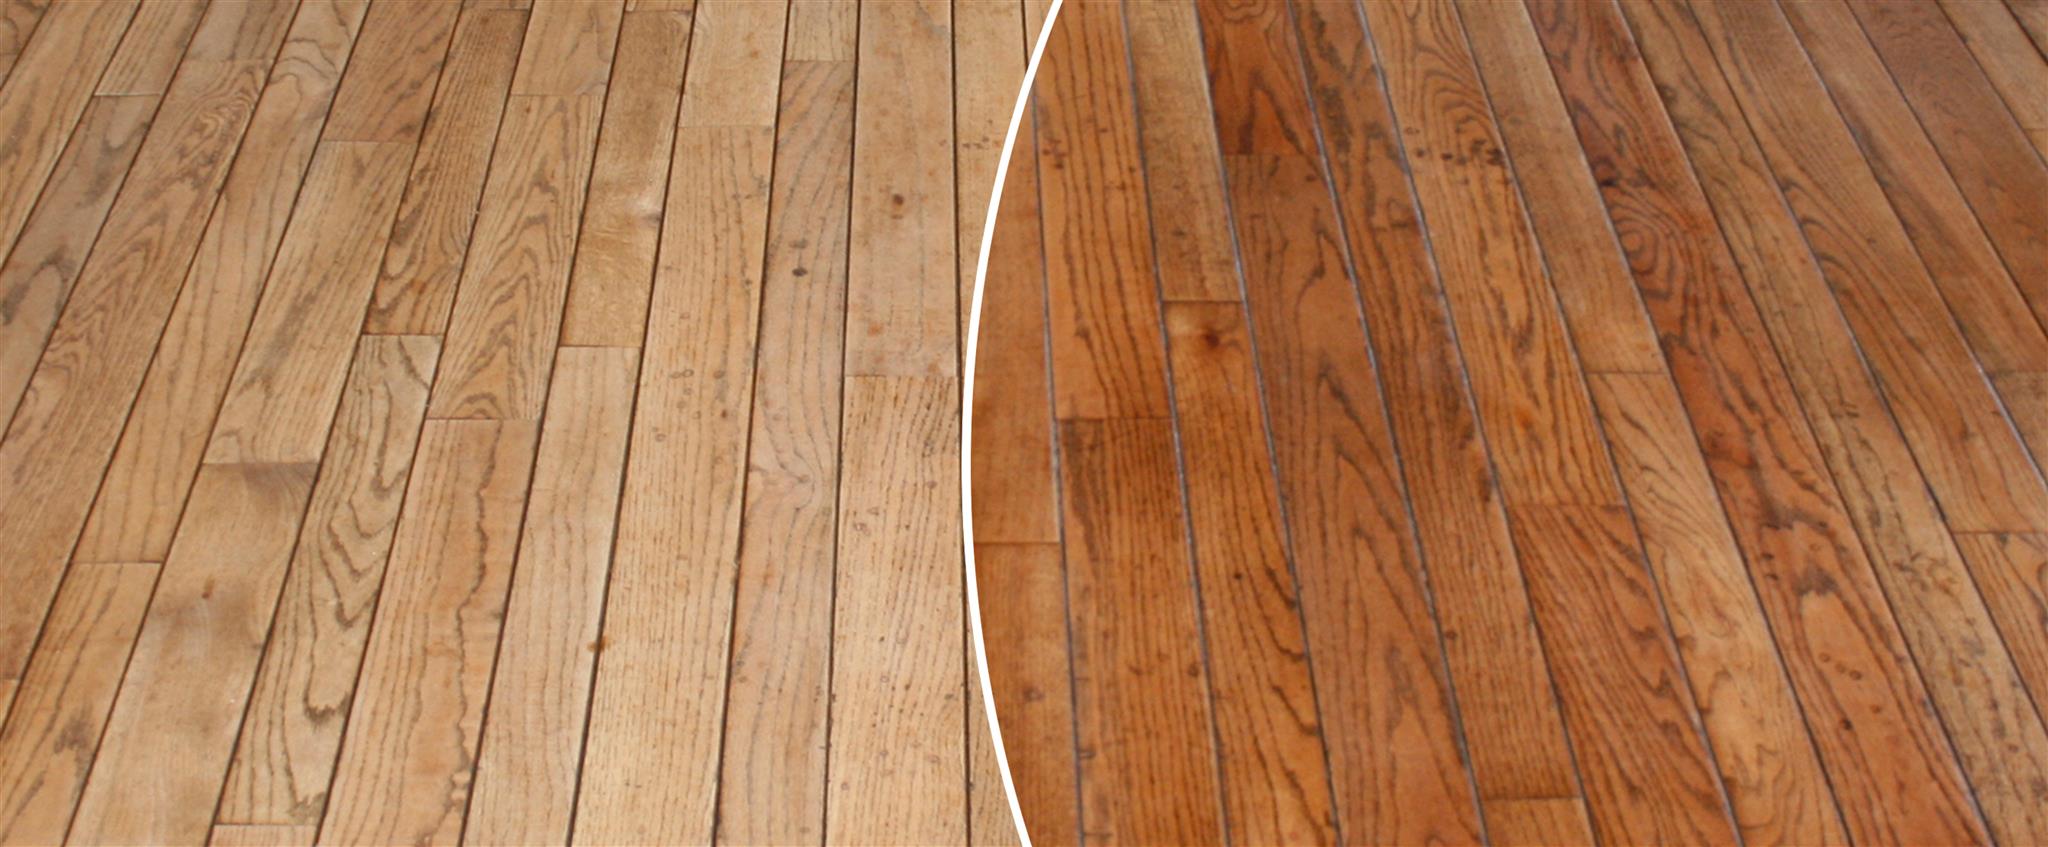 Wood Floor Refinishing Services N Hance, Maine Hardwood Floor Refinishing